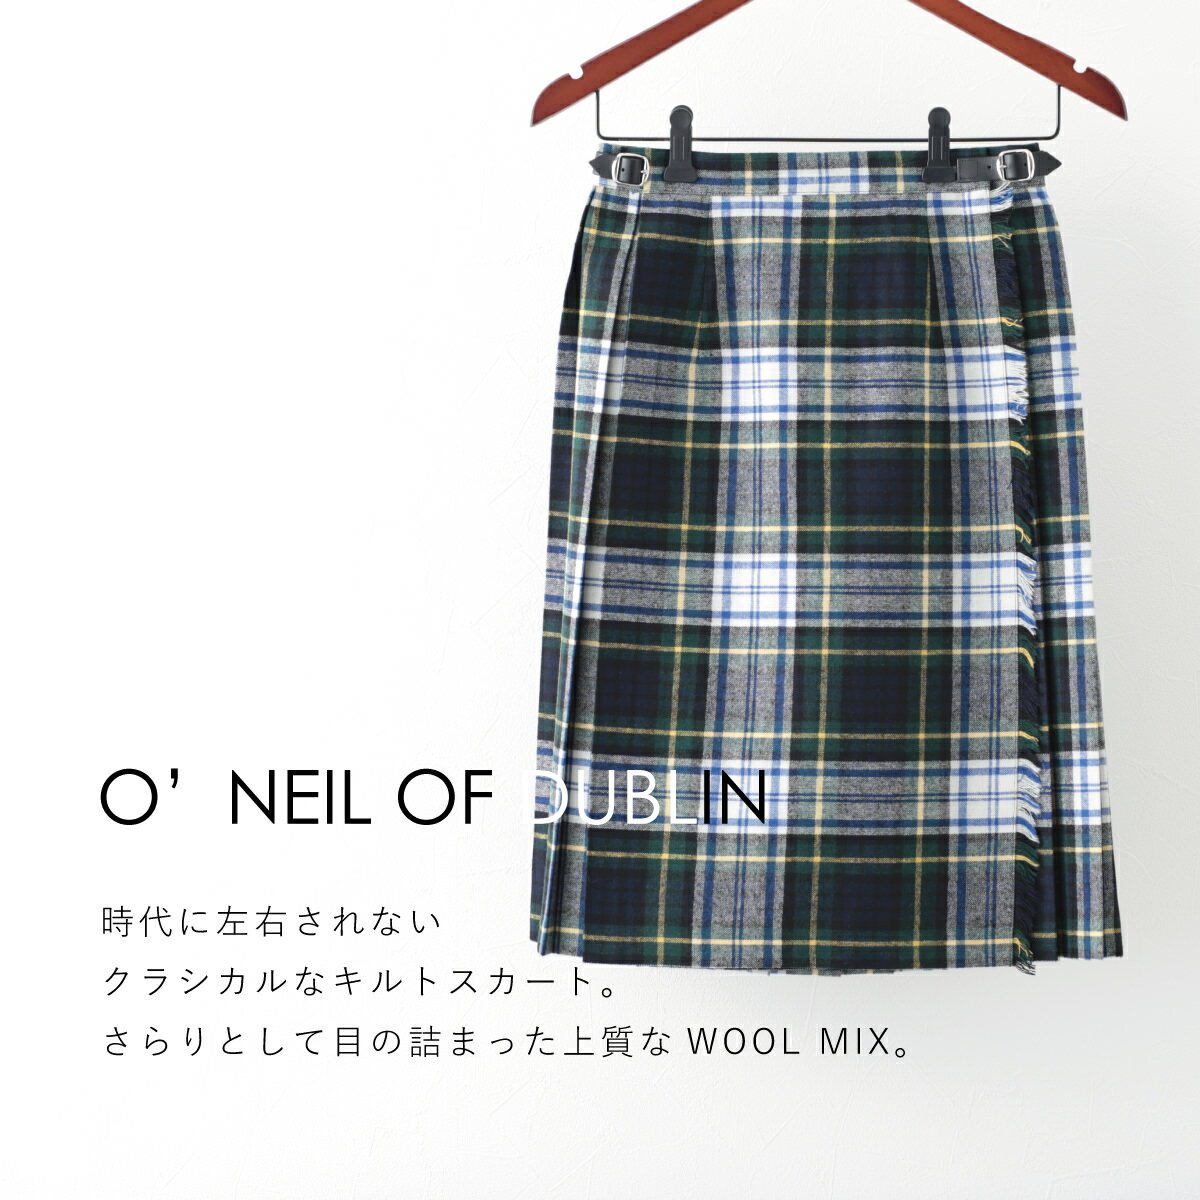 O'NEIL OF DUBLIN オニールオブダブリン キルト 59cm 20色 タータンチェック ひざ丈 ラップスカート 巻きスカート アイルランド製 タータン チェック ロイヤルスチュアート 1枚仕立て ウールミックス ギフト